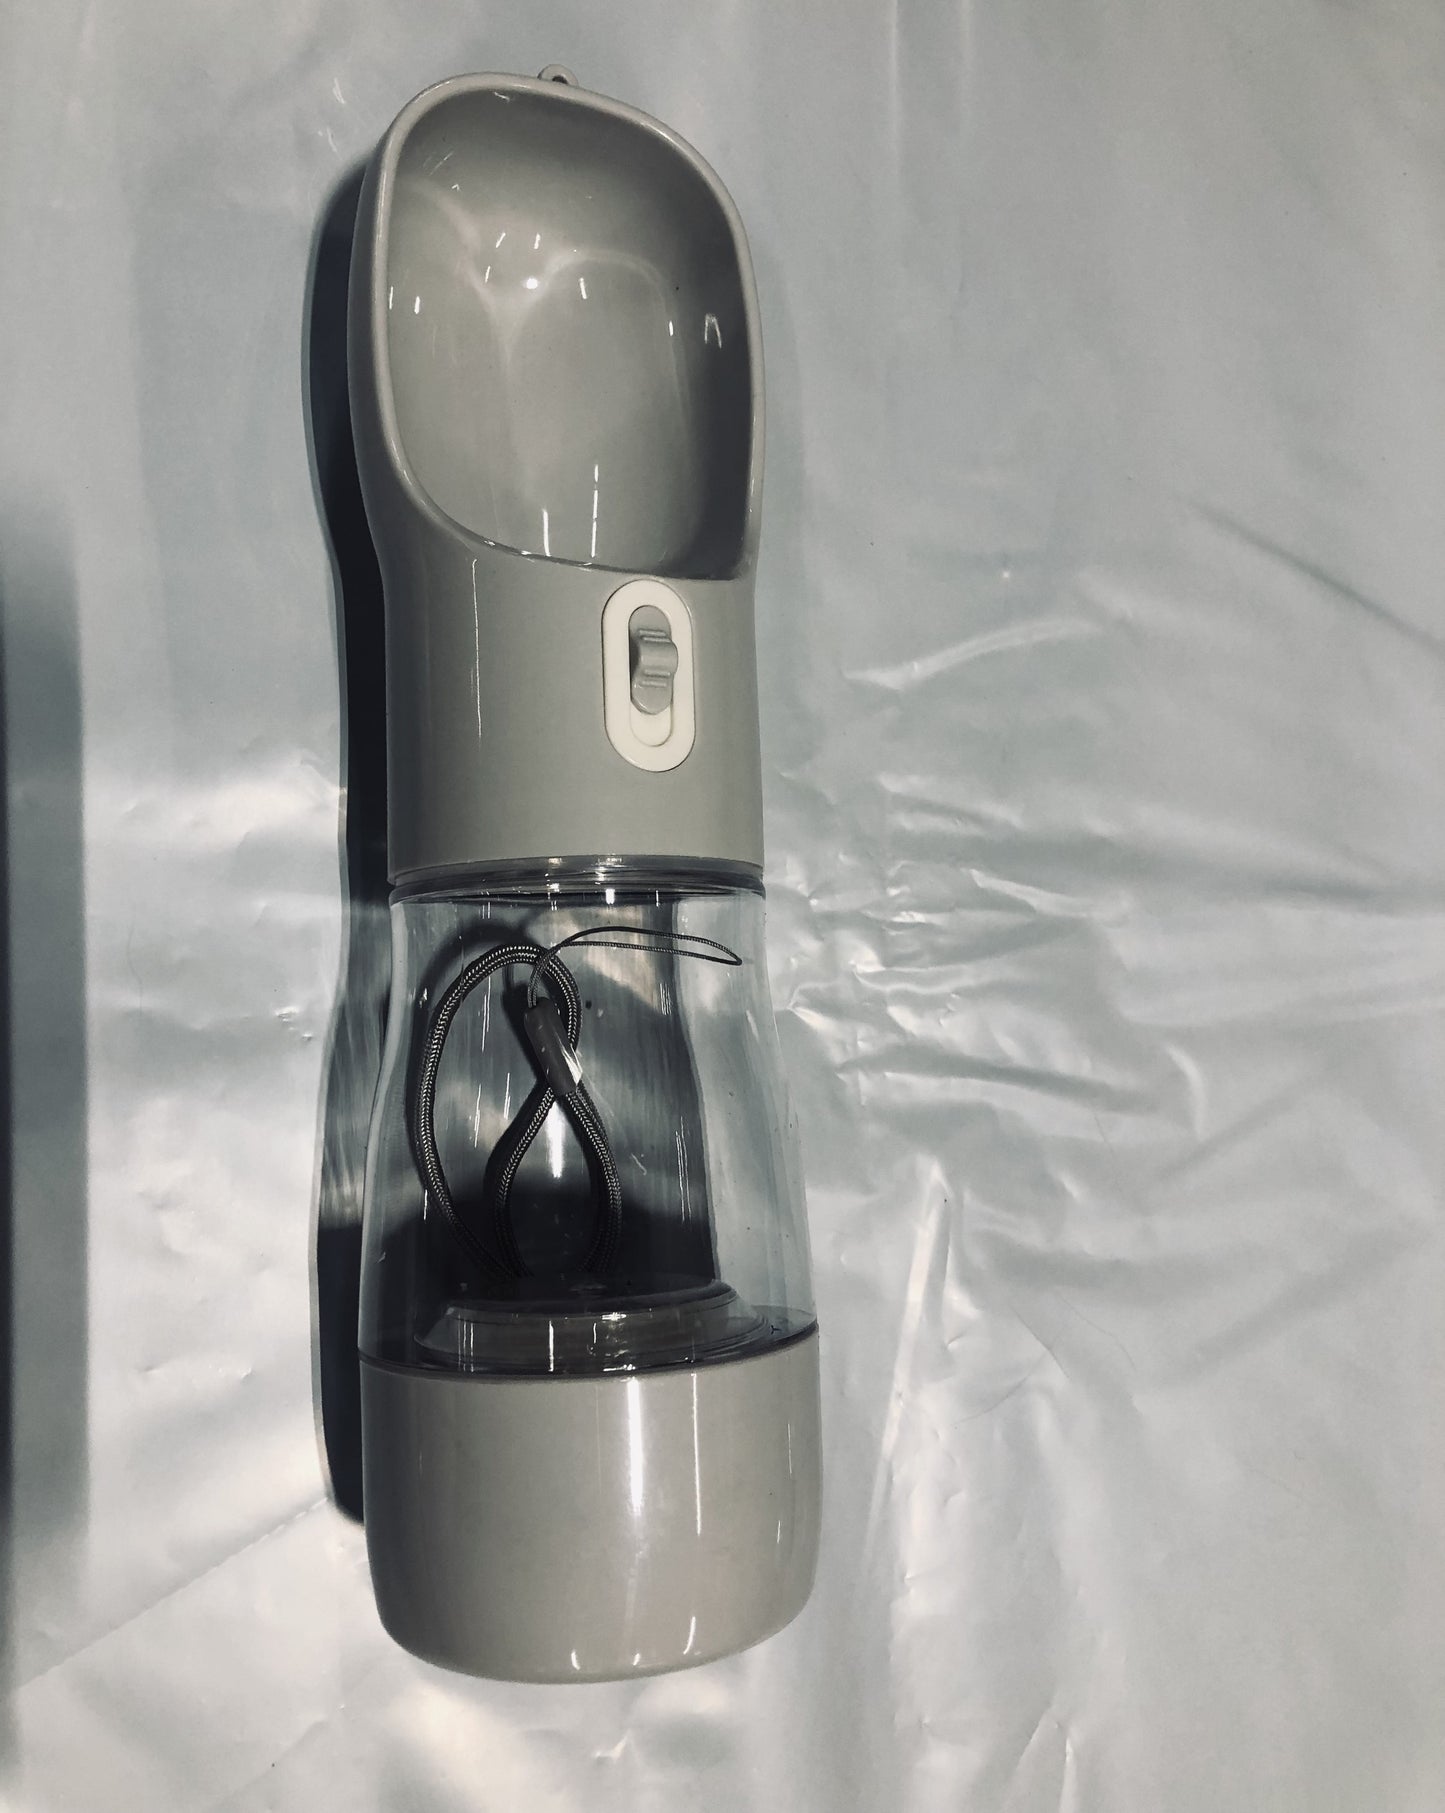 HydroPup™ - Portable Pet Water Bottle